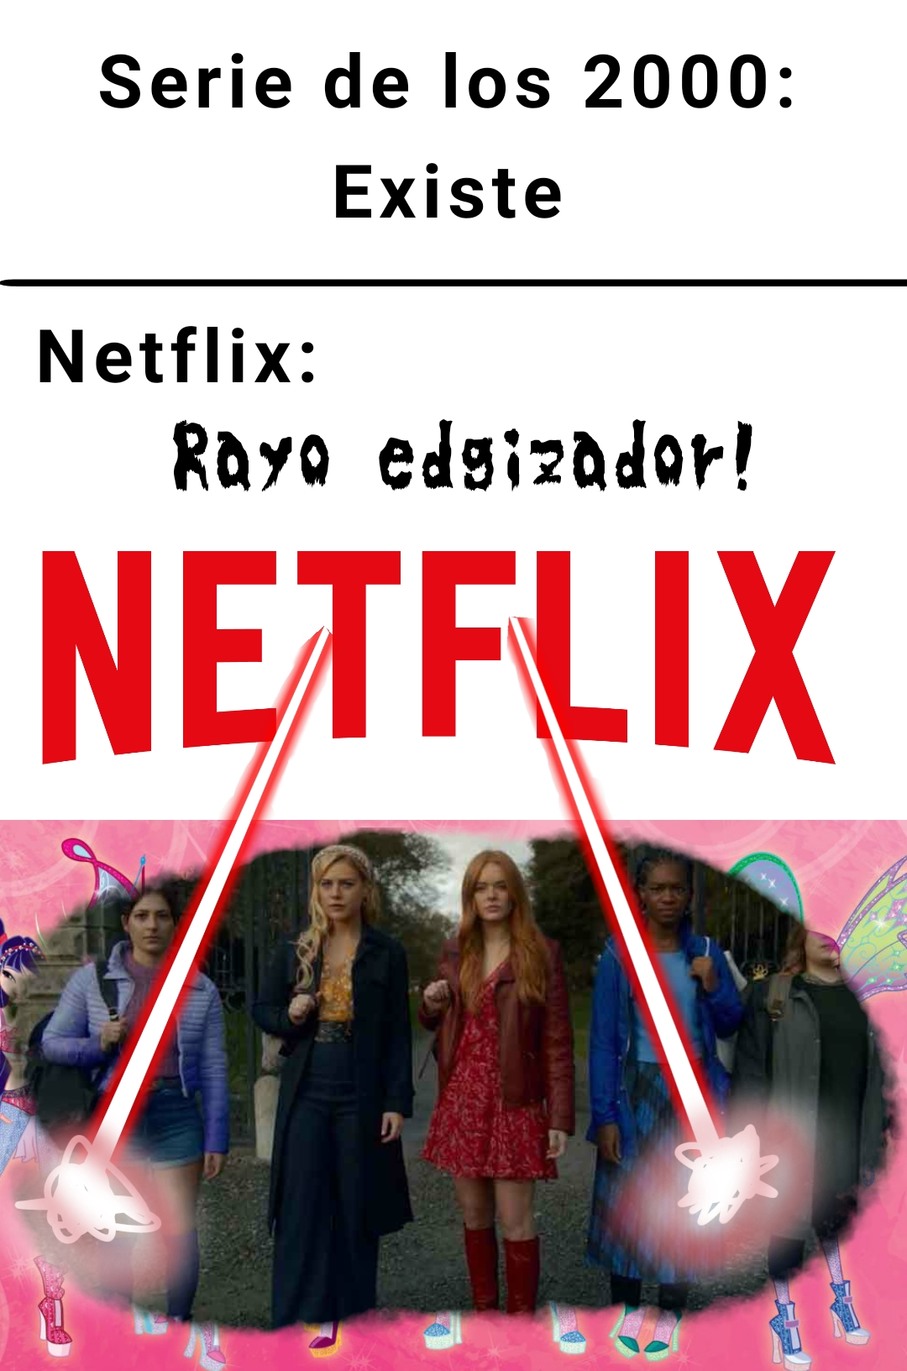 Netflix por que - meme